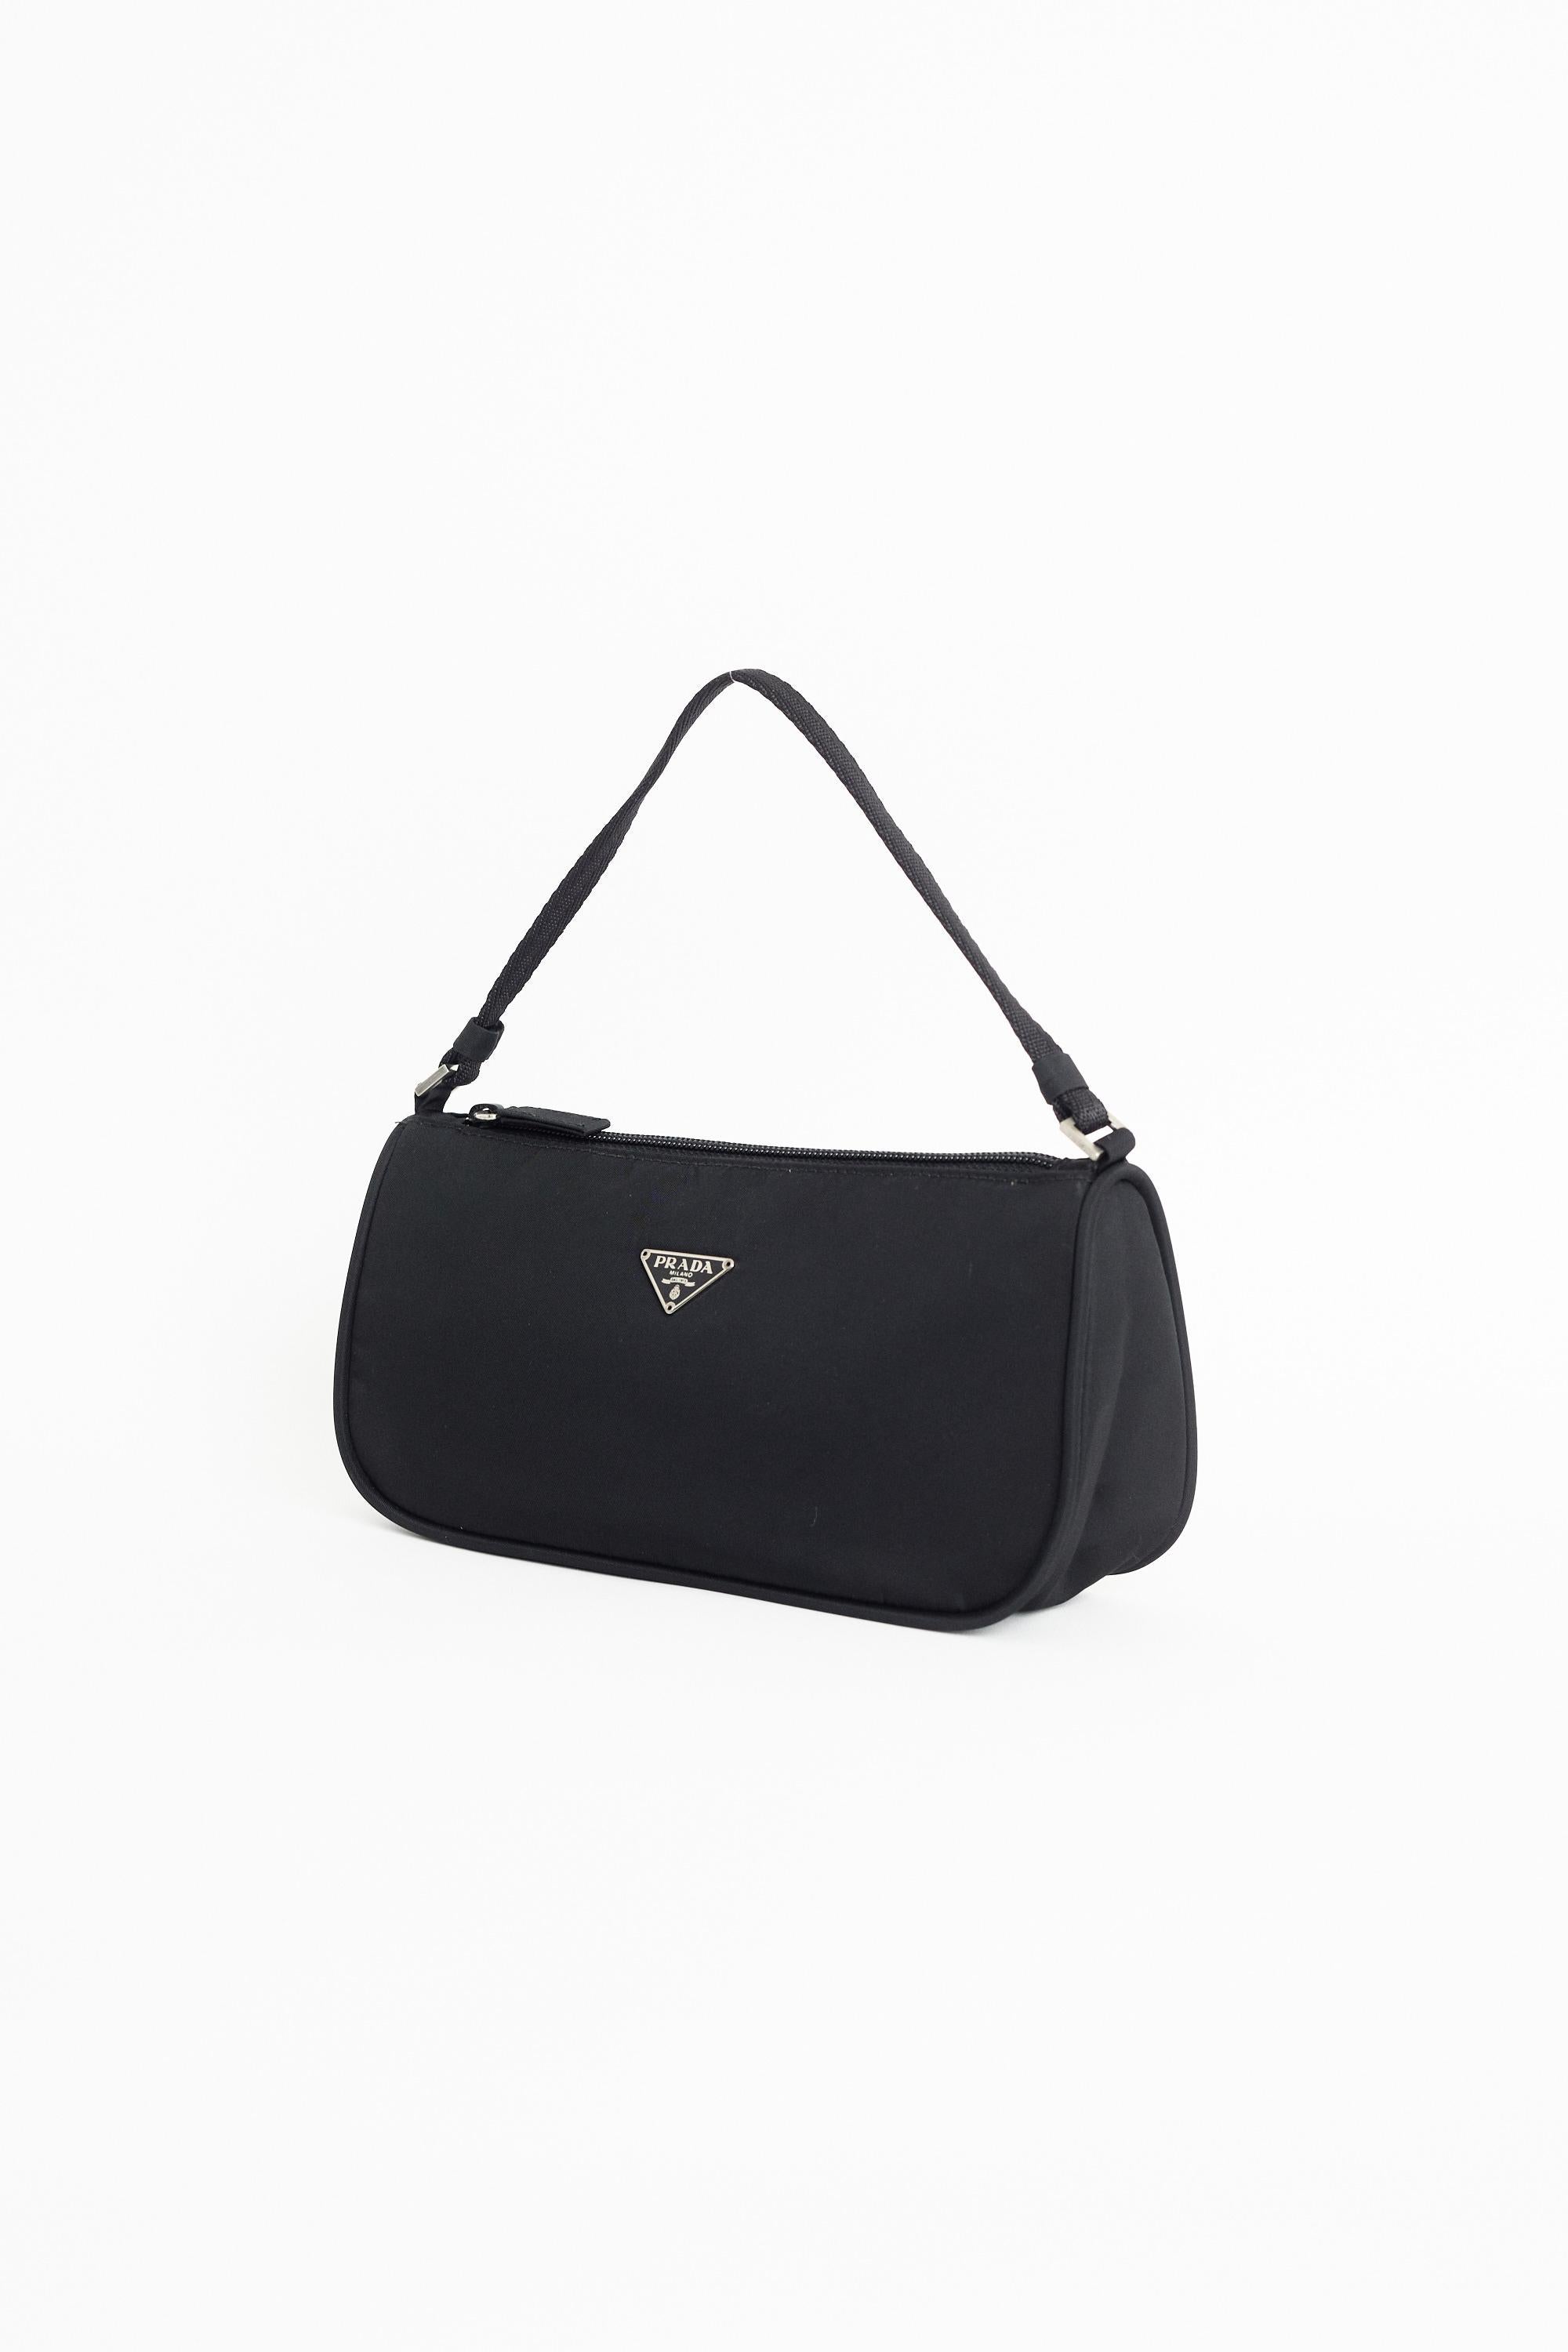 Prada Nylon Tessuto Sport Handbag In Excellent Condition In London, GB